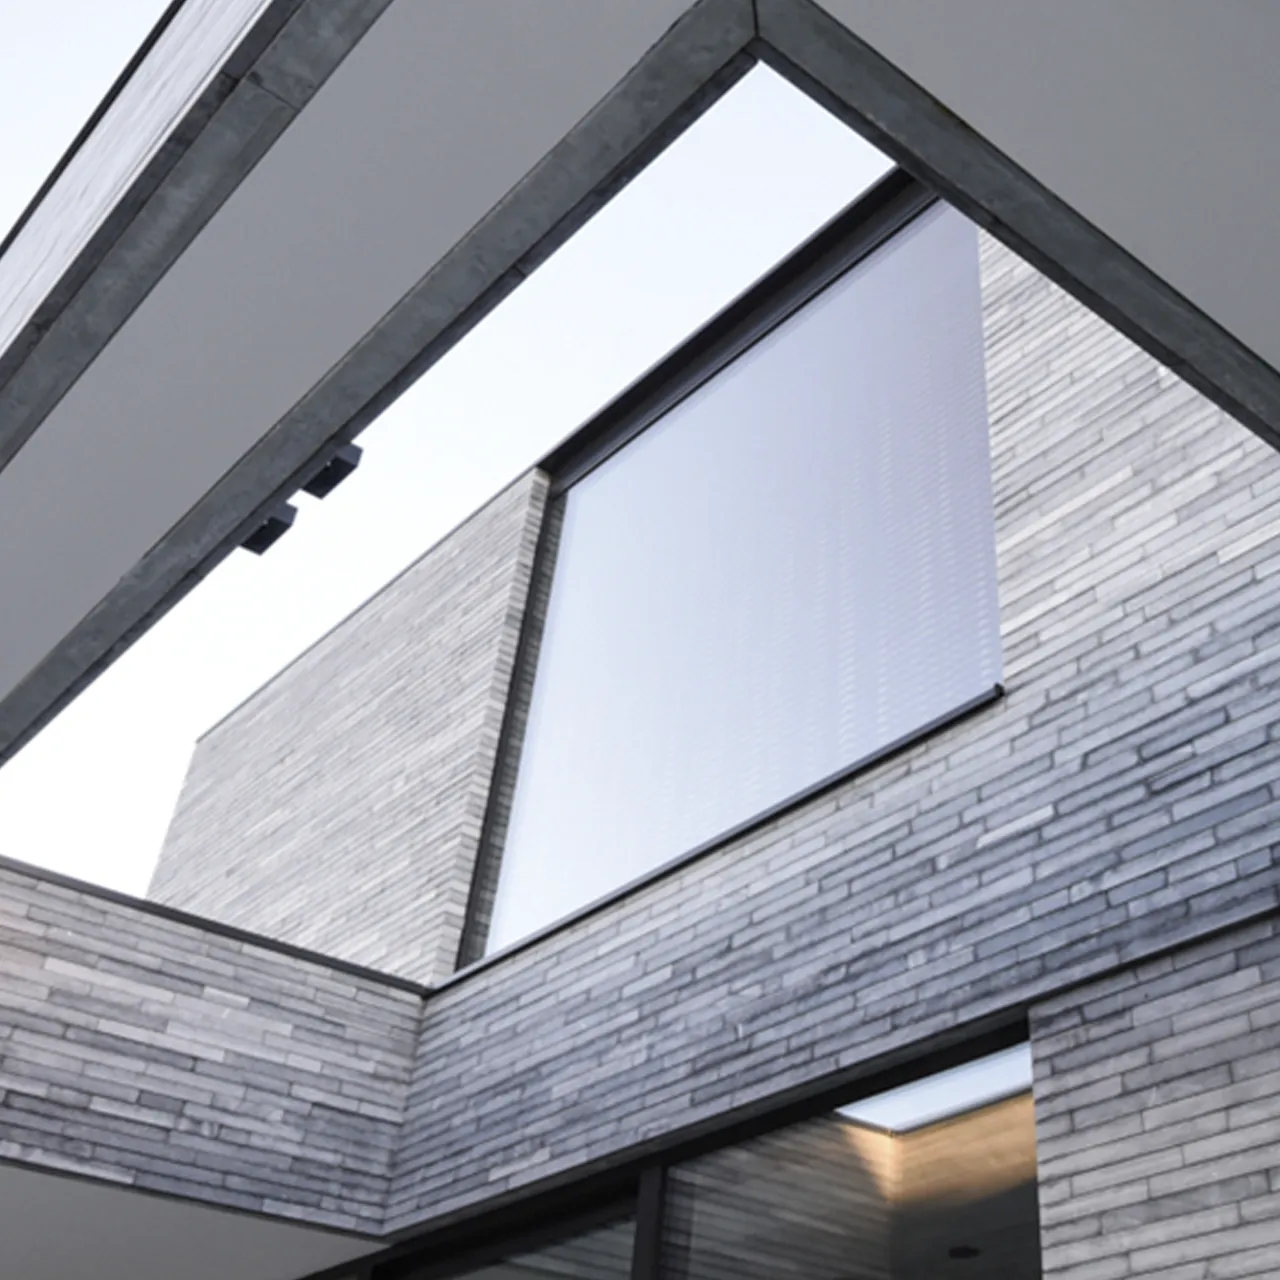 Reynaers Aluminium Windows